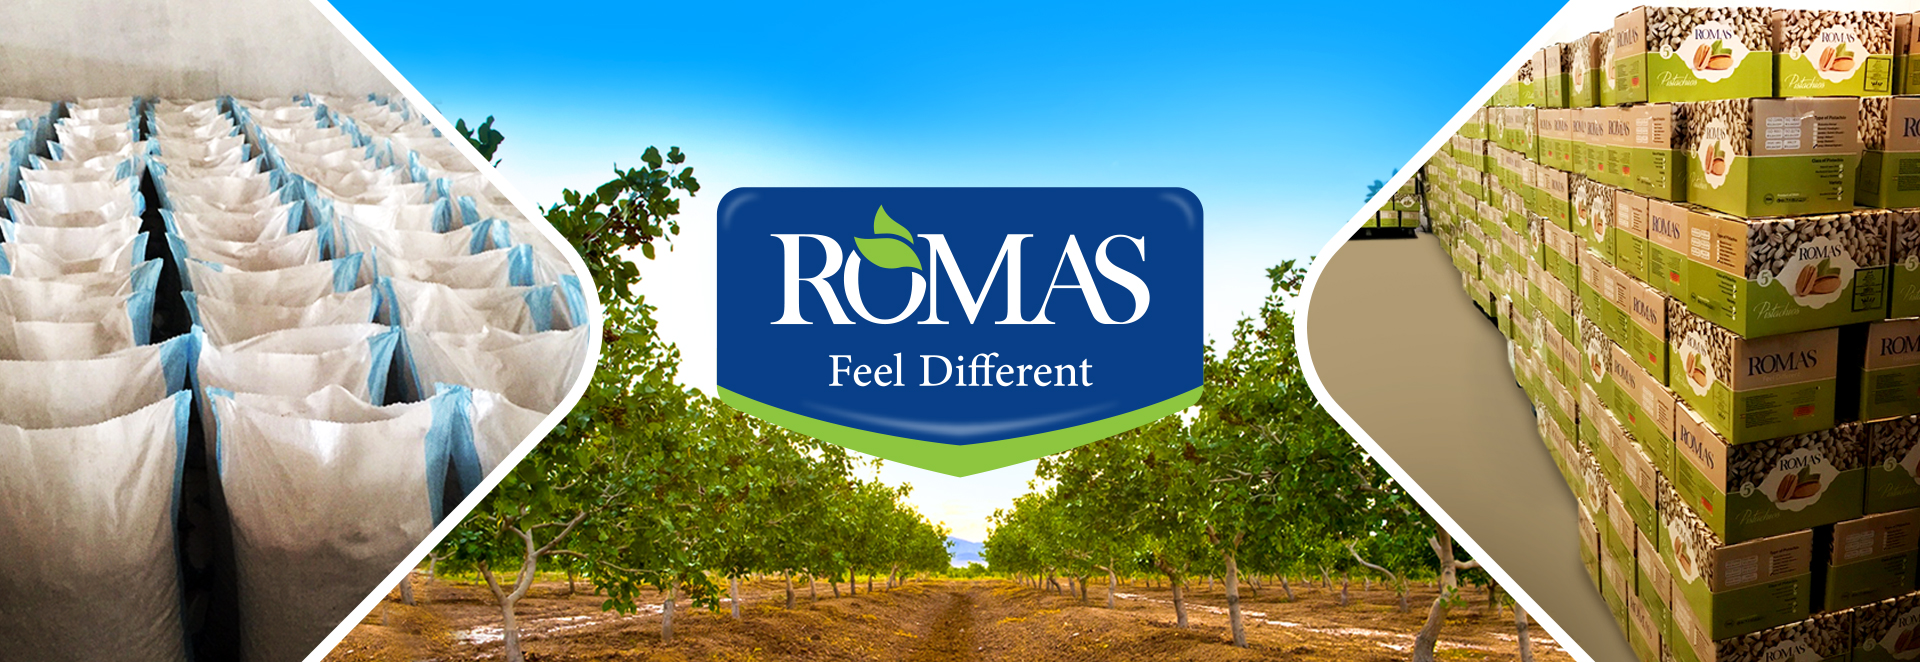 Romas feel different